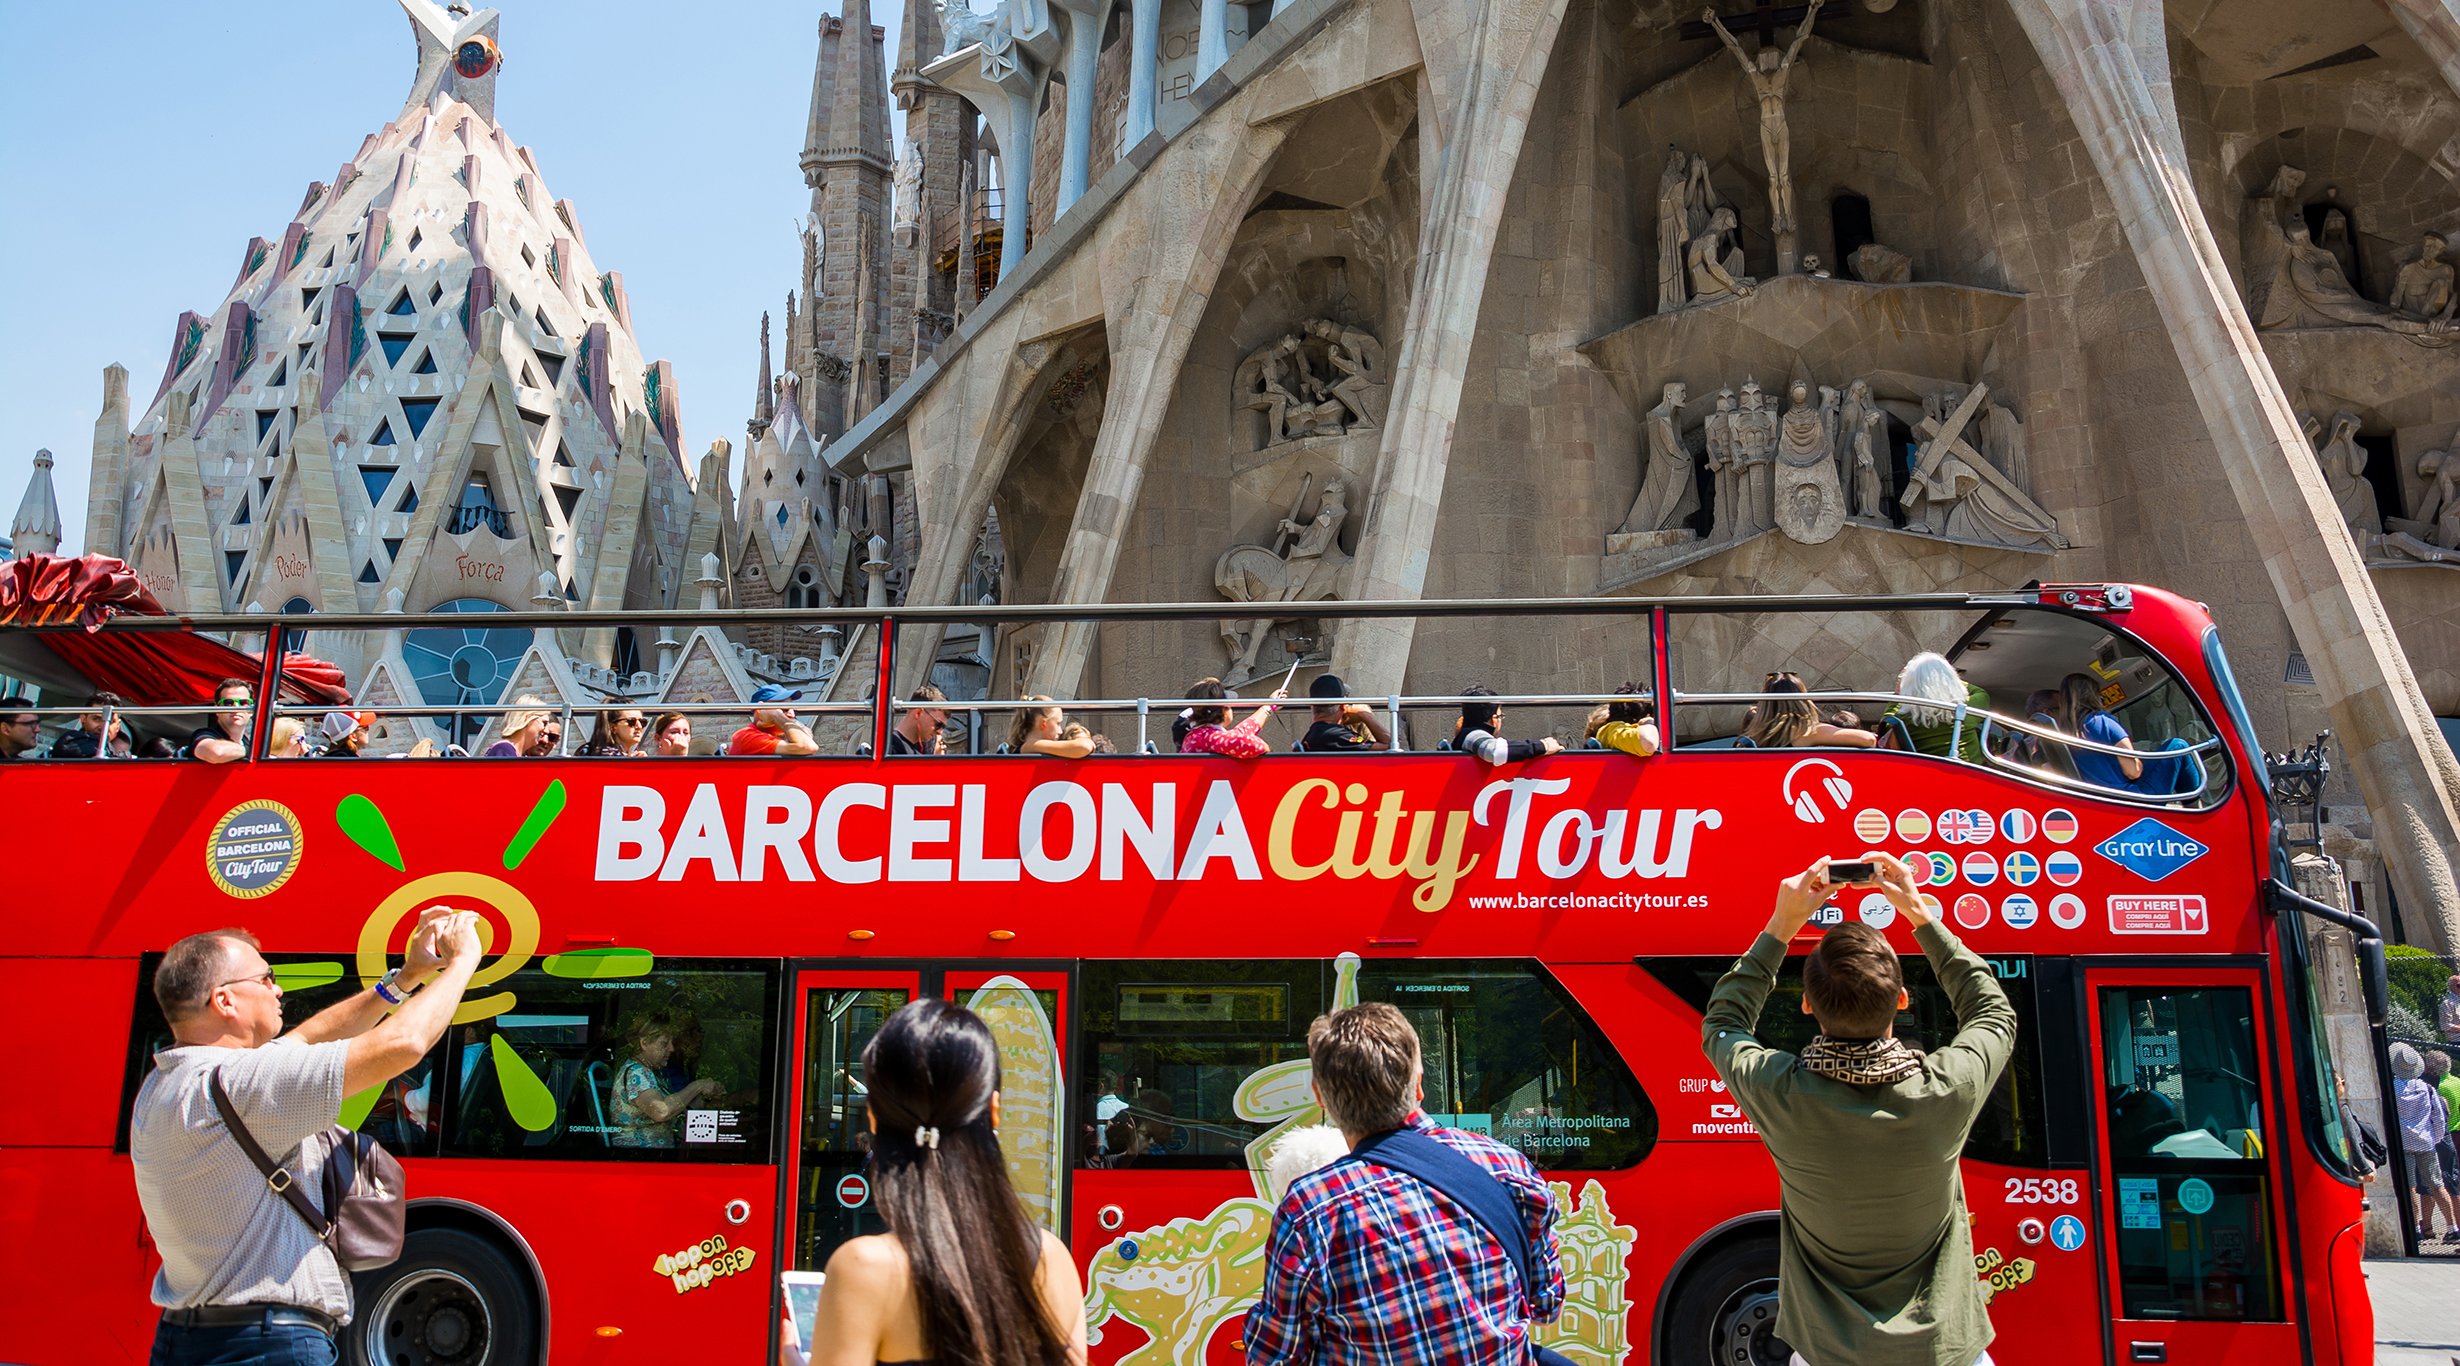 Tourist tax hike will hit visitors to Spain’s most popular city Falstaff